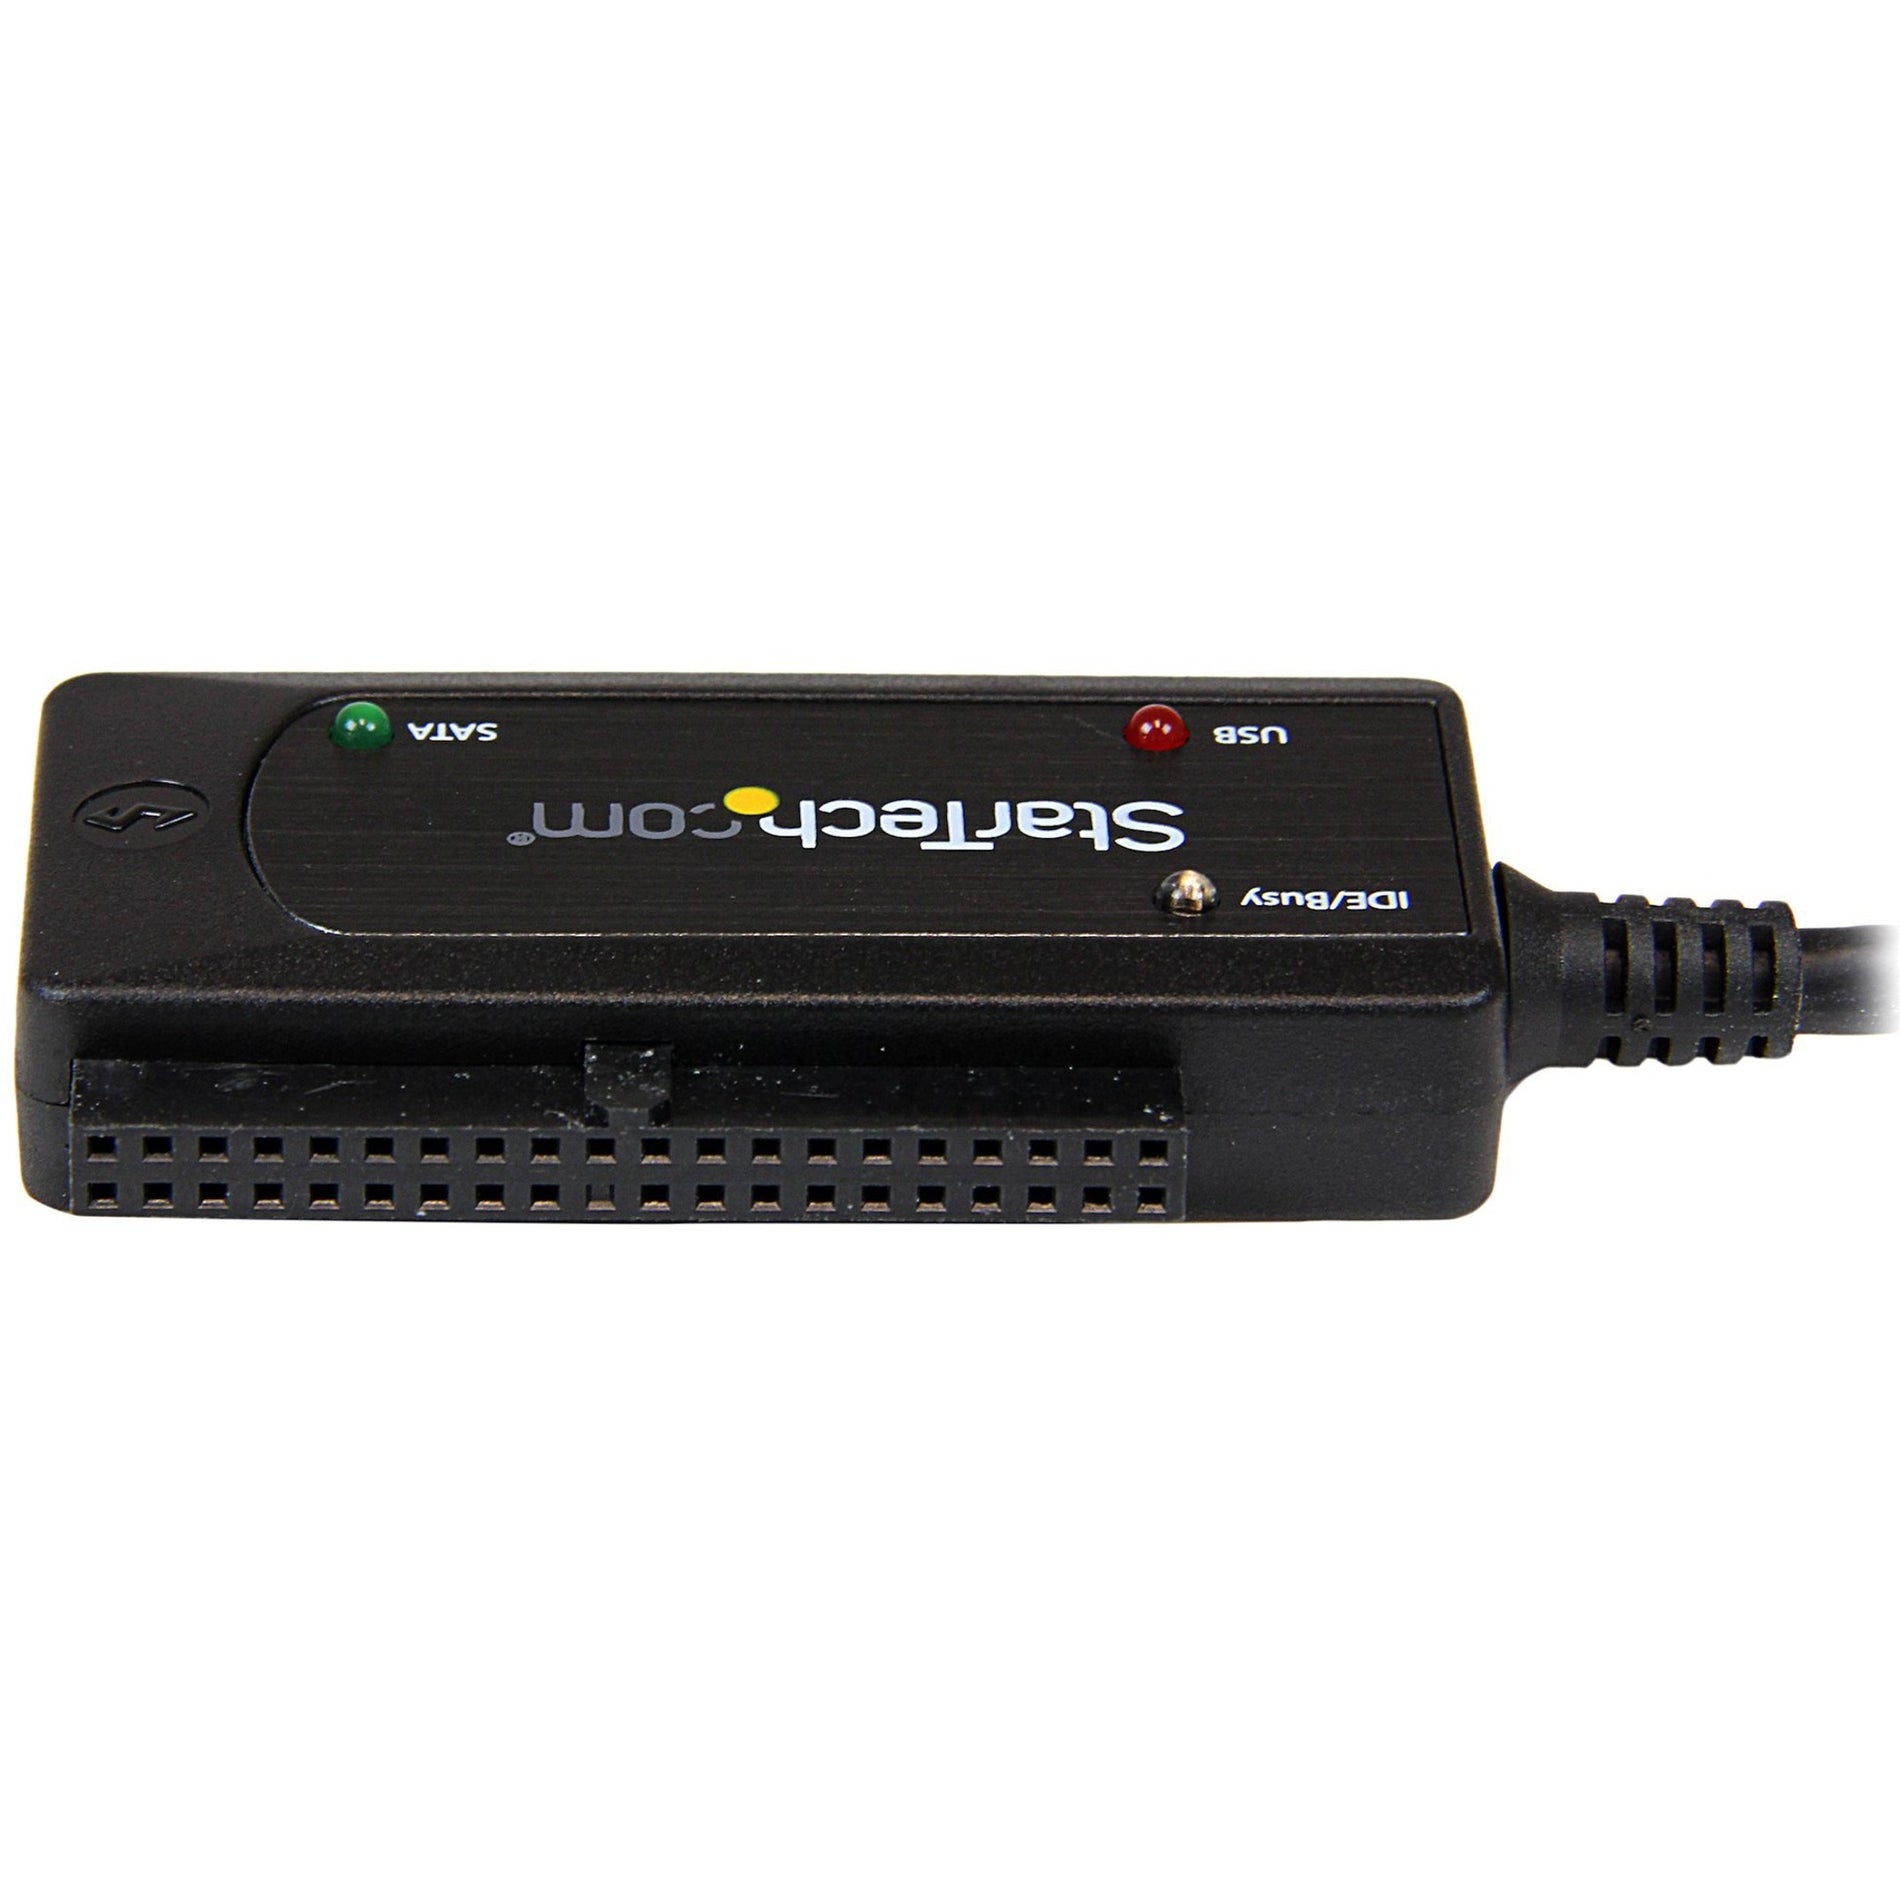 StarTech.com USB3SSATAIDE USB 3.0 to SATA or IDE Hard Drive Adapter Converter, High-Speed Data Transfer